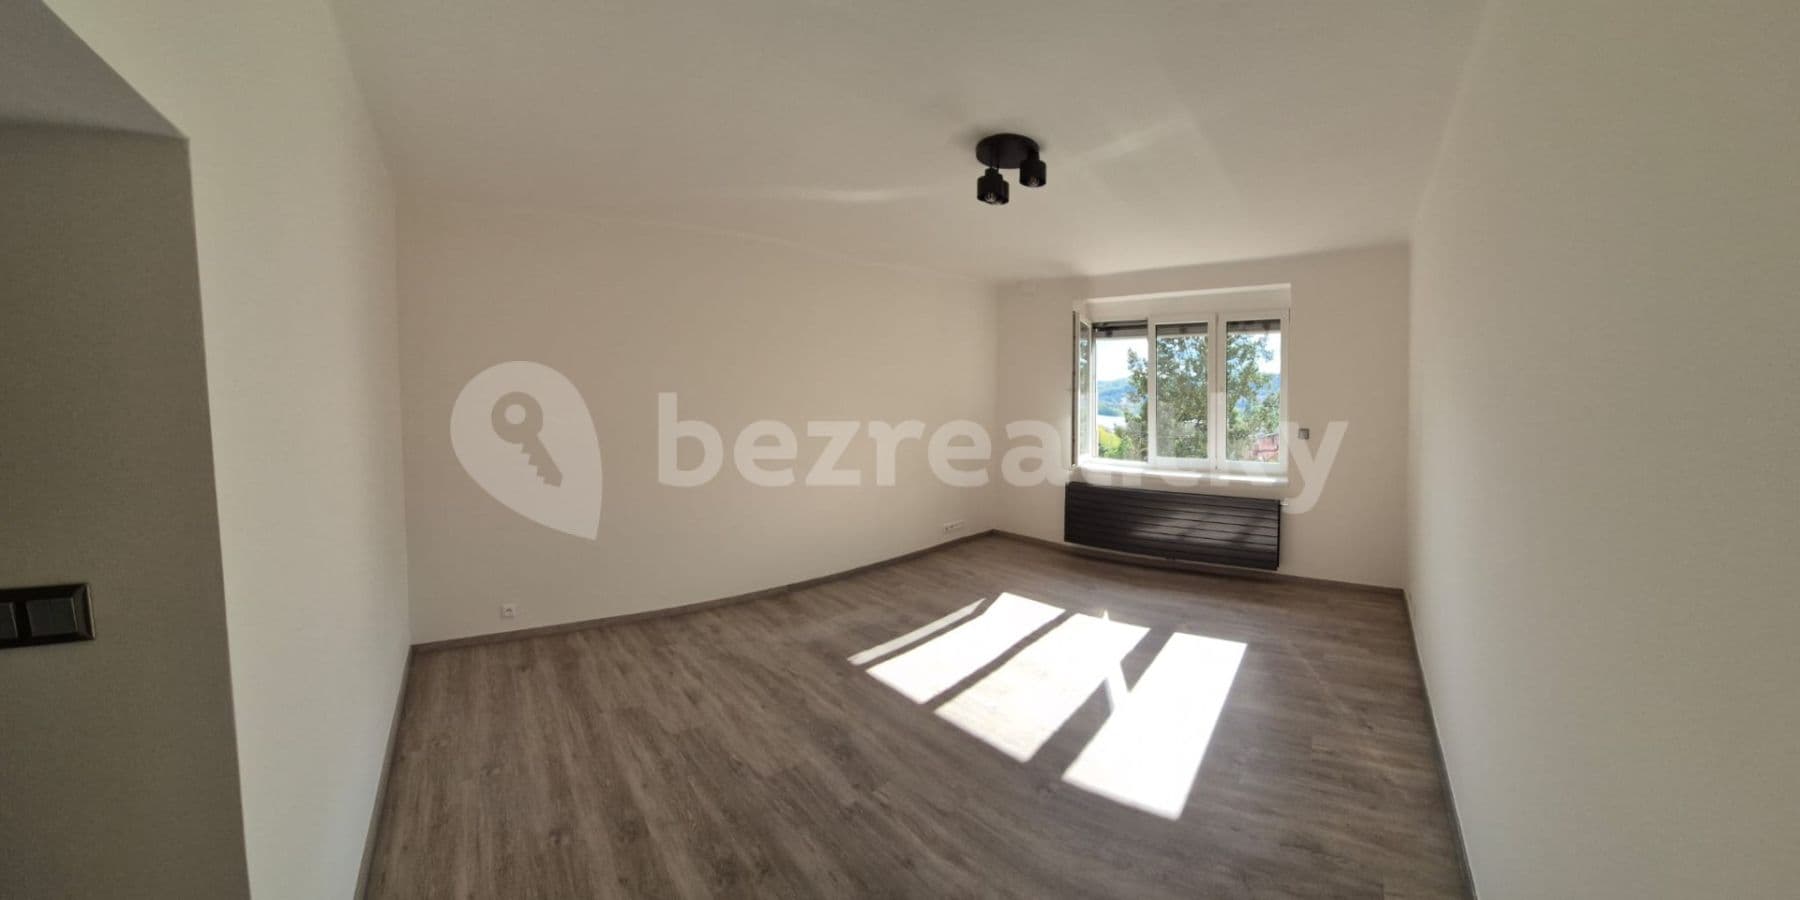 1 bedroom flat to rent, 41 m², Podolské nábřeží, Prague, Prague